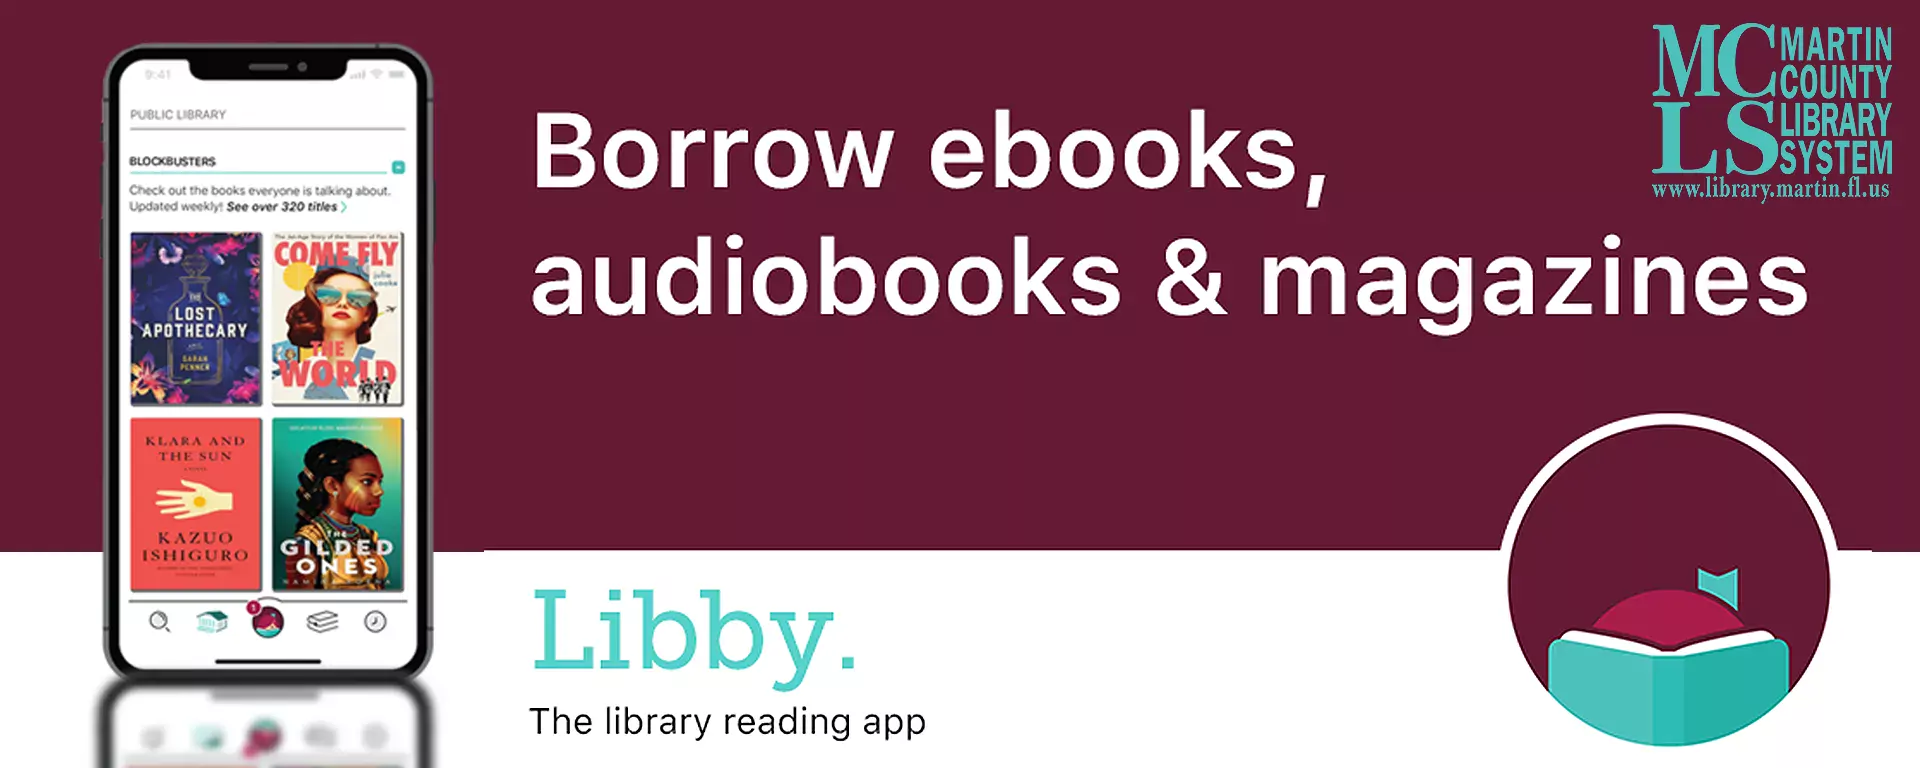 Borrow ebooks, audiobooks and magazines with Libby